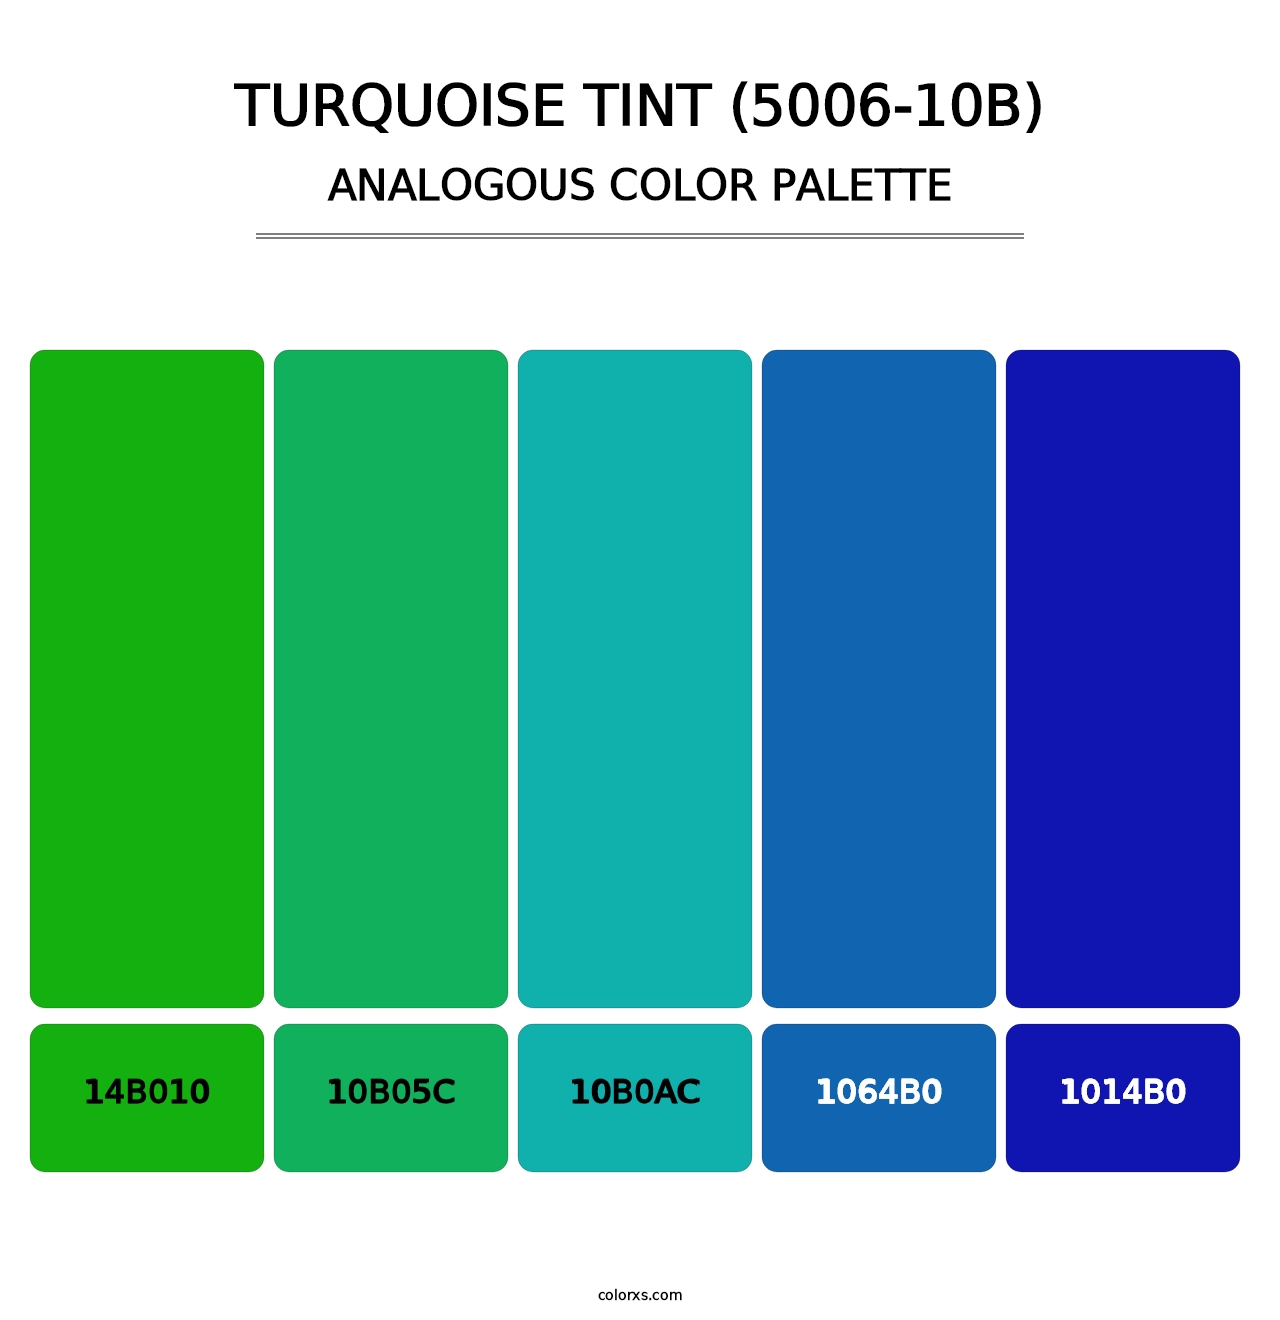 Turquoise Tint (5006-10B) - Analogous Color Palette